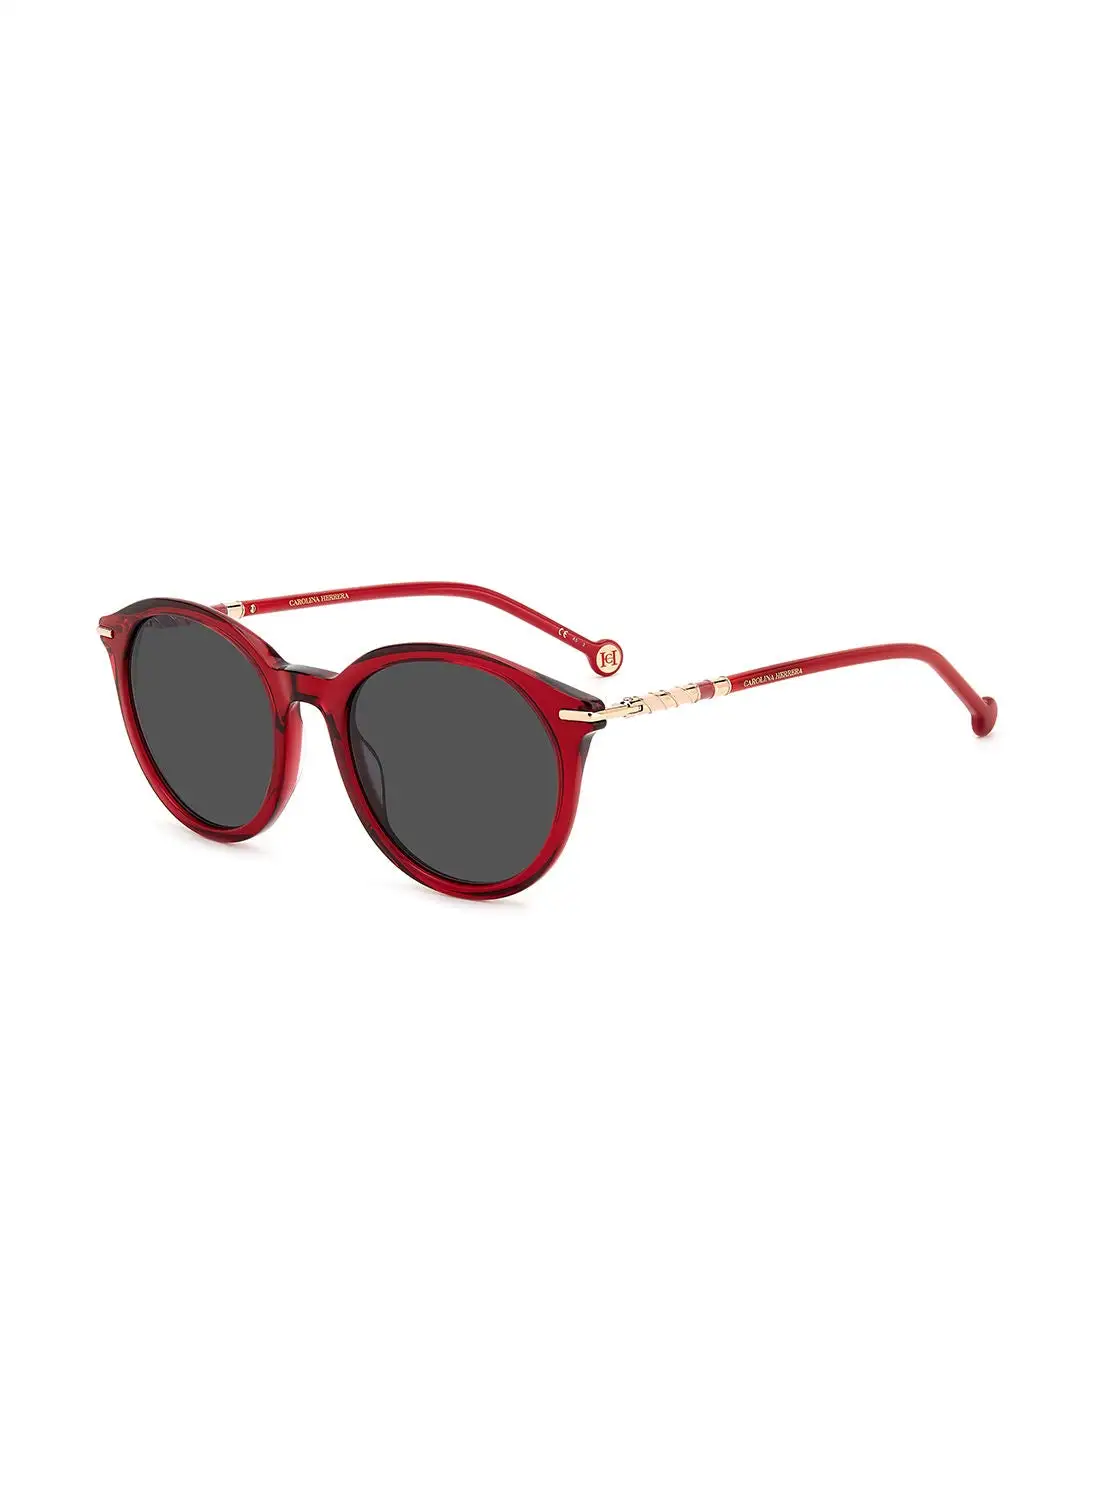 CAROLINA HERRERA Women's UV Protection Round Sunglasses - Her 0092/S Red 53 - Lens Size: 53 Mm